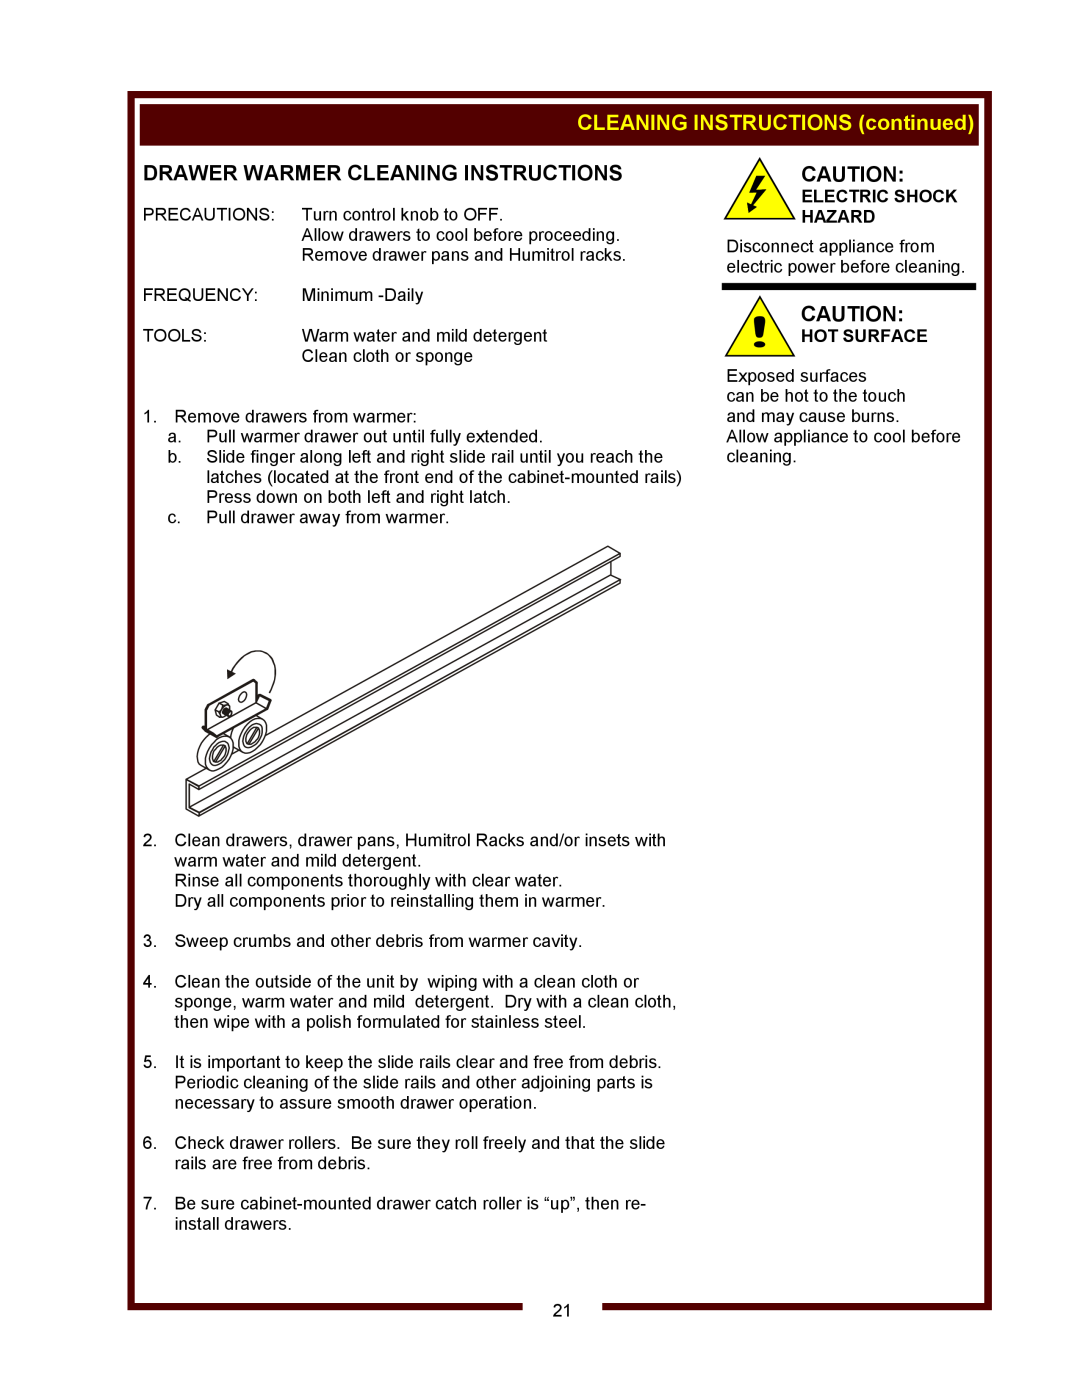 Wells WV-2SHGRW Drawer Warmer Cleaning Instructions, CLEANING INSTRUCTIONS continued, Electric Shock Hazard, Hot Surface 